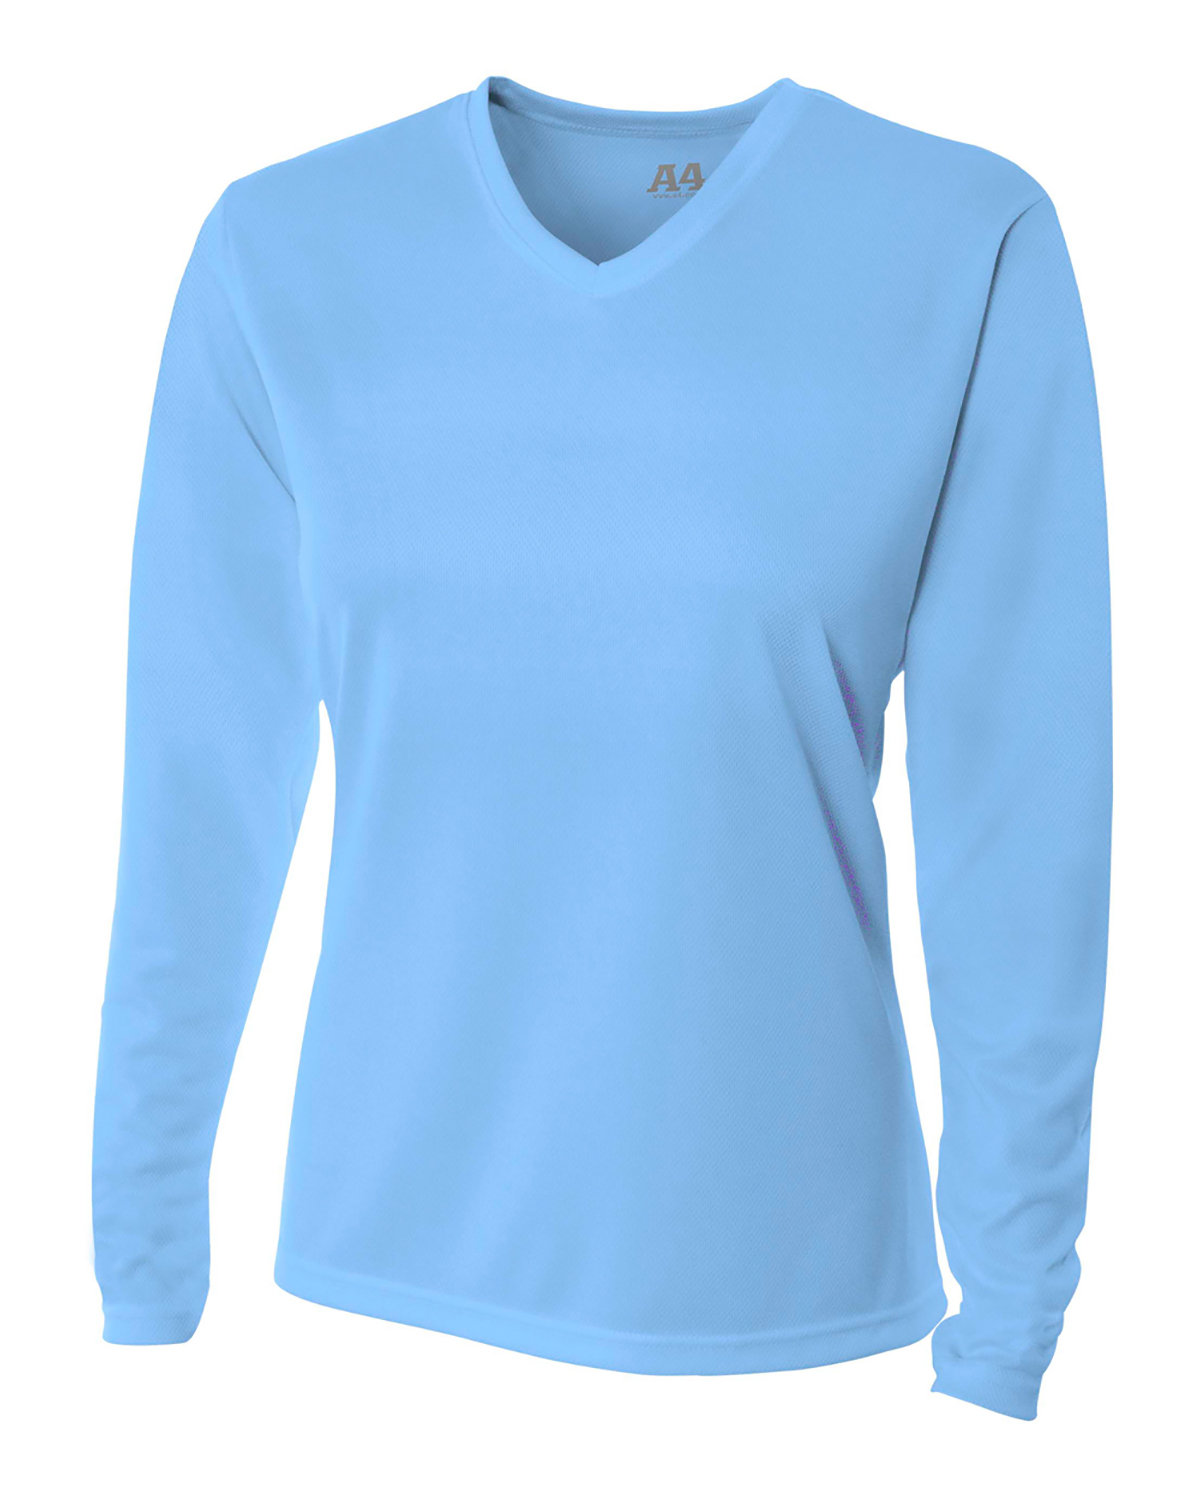 Navy Blue Half Sleeves V Neck T-Shirt– Be Awara